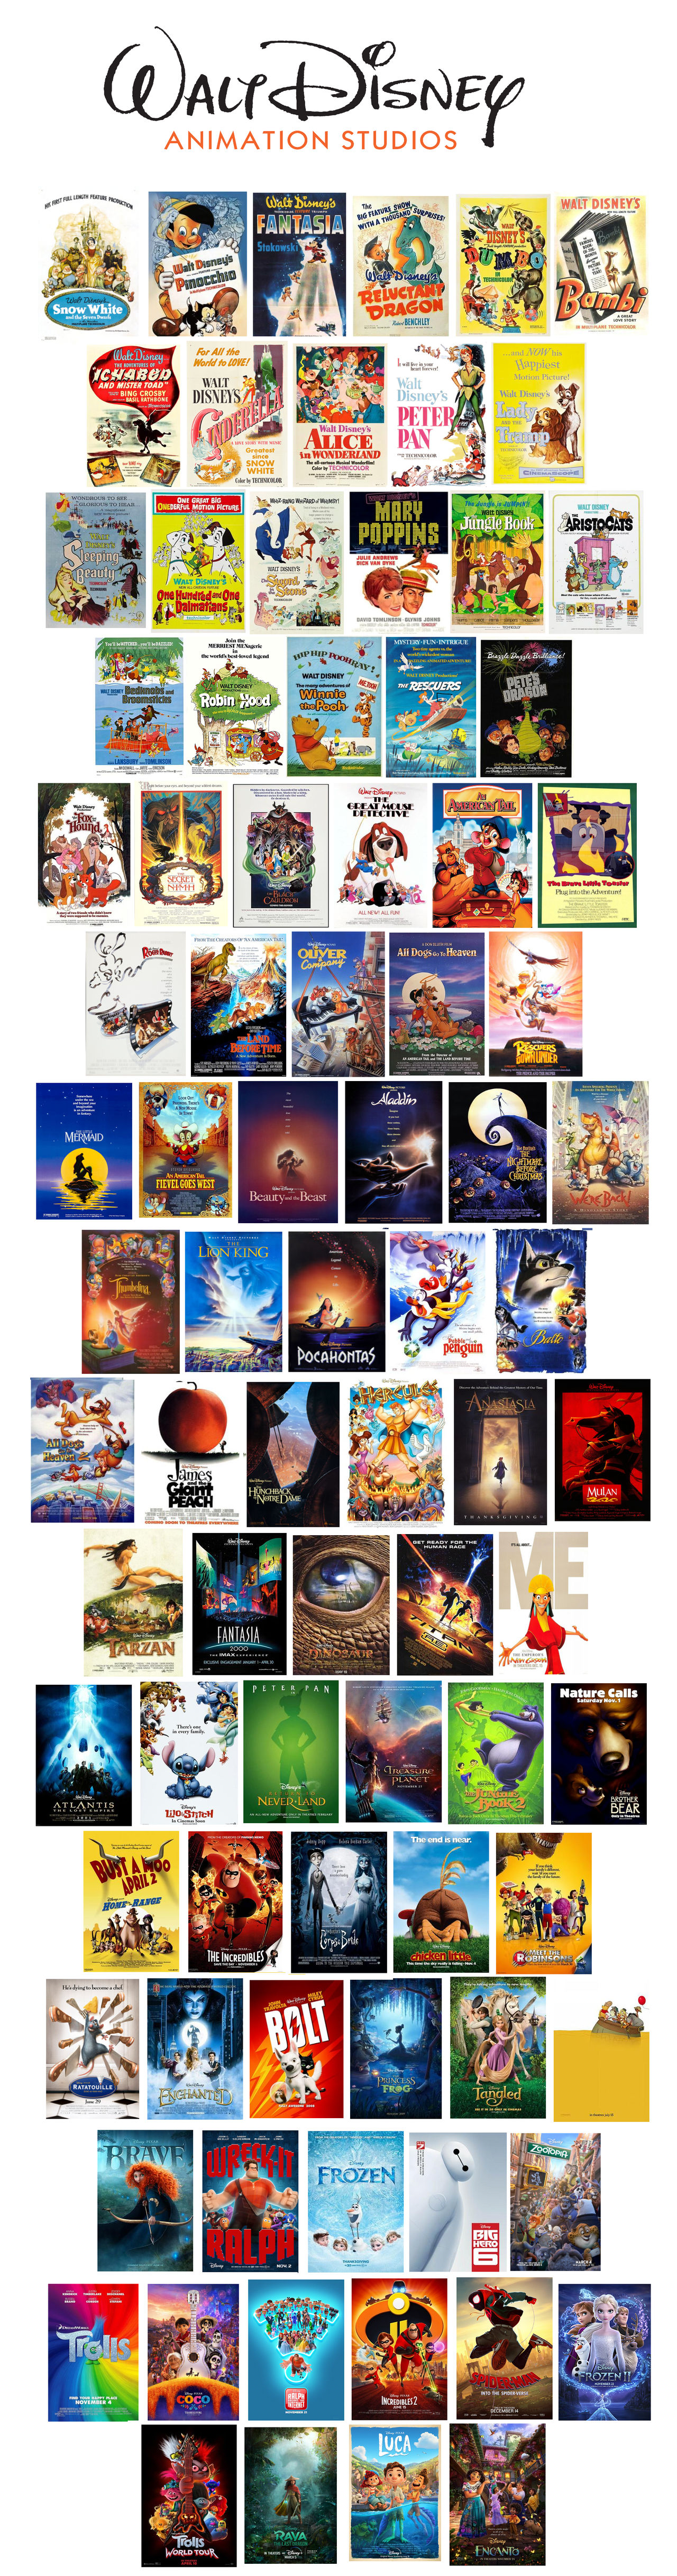 List of Walt Disney Animation Studios Films by Appleberries22 on DeviantArt